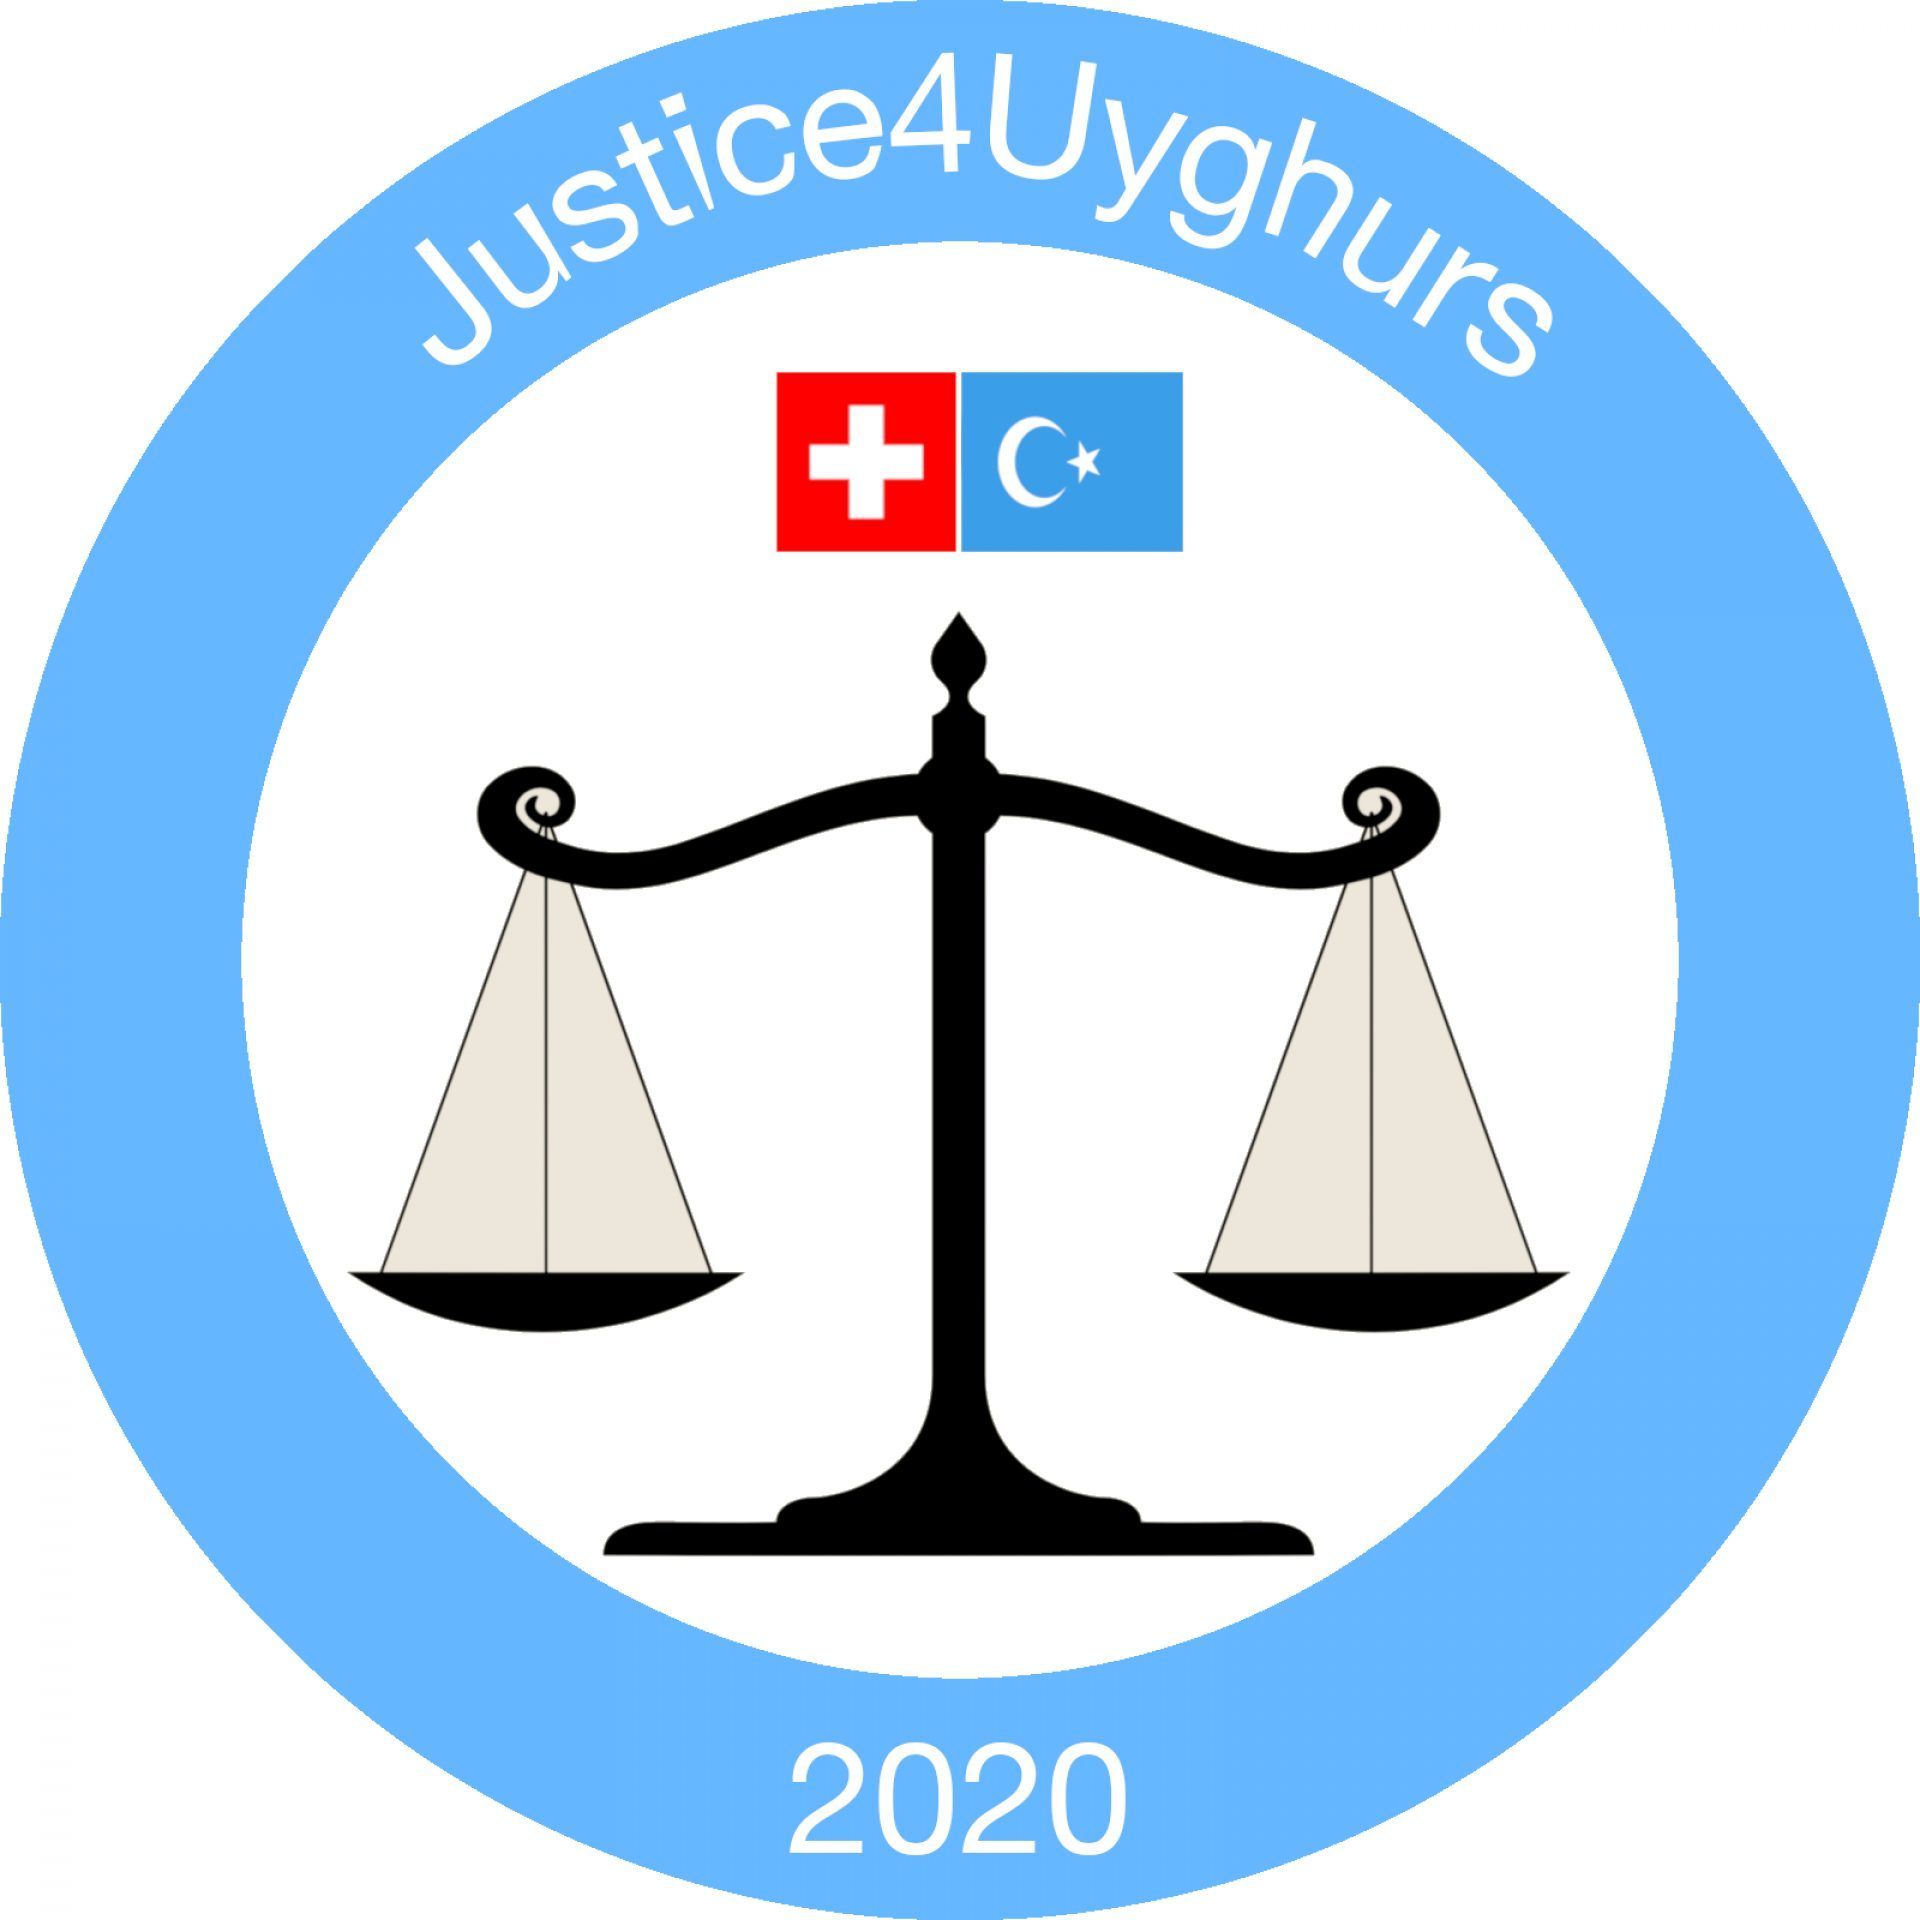 Justice for Uyghurs